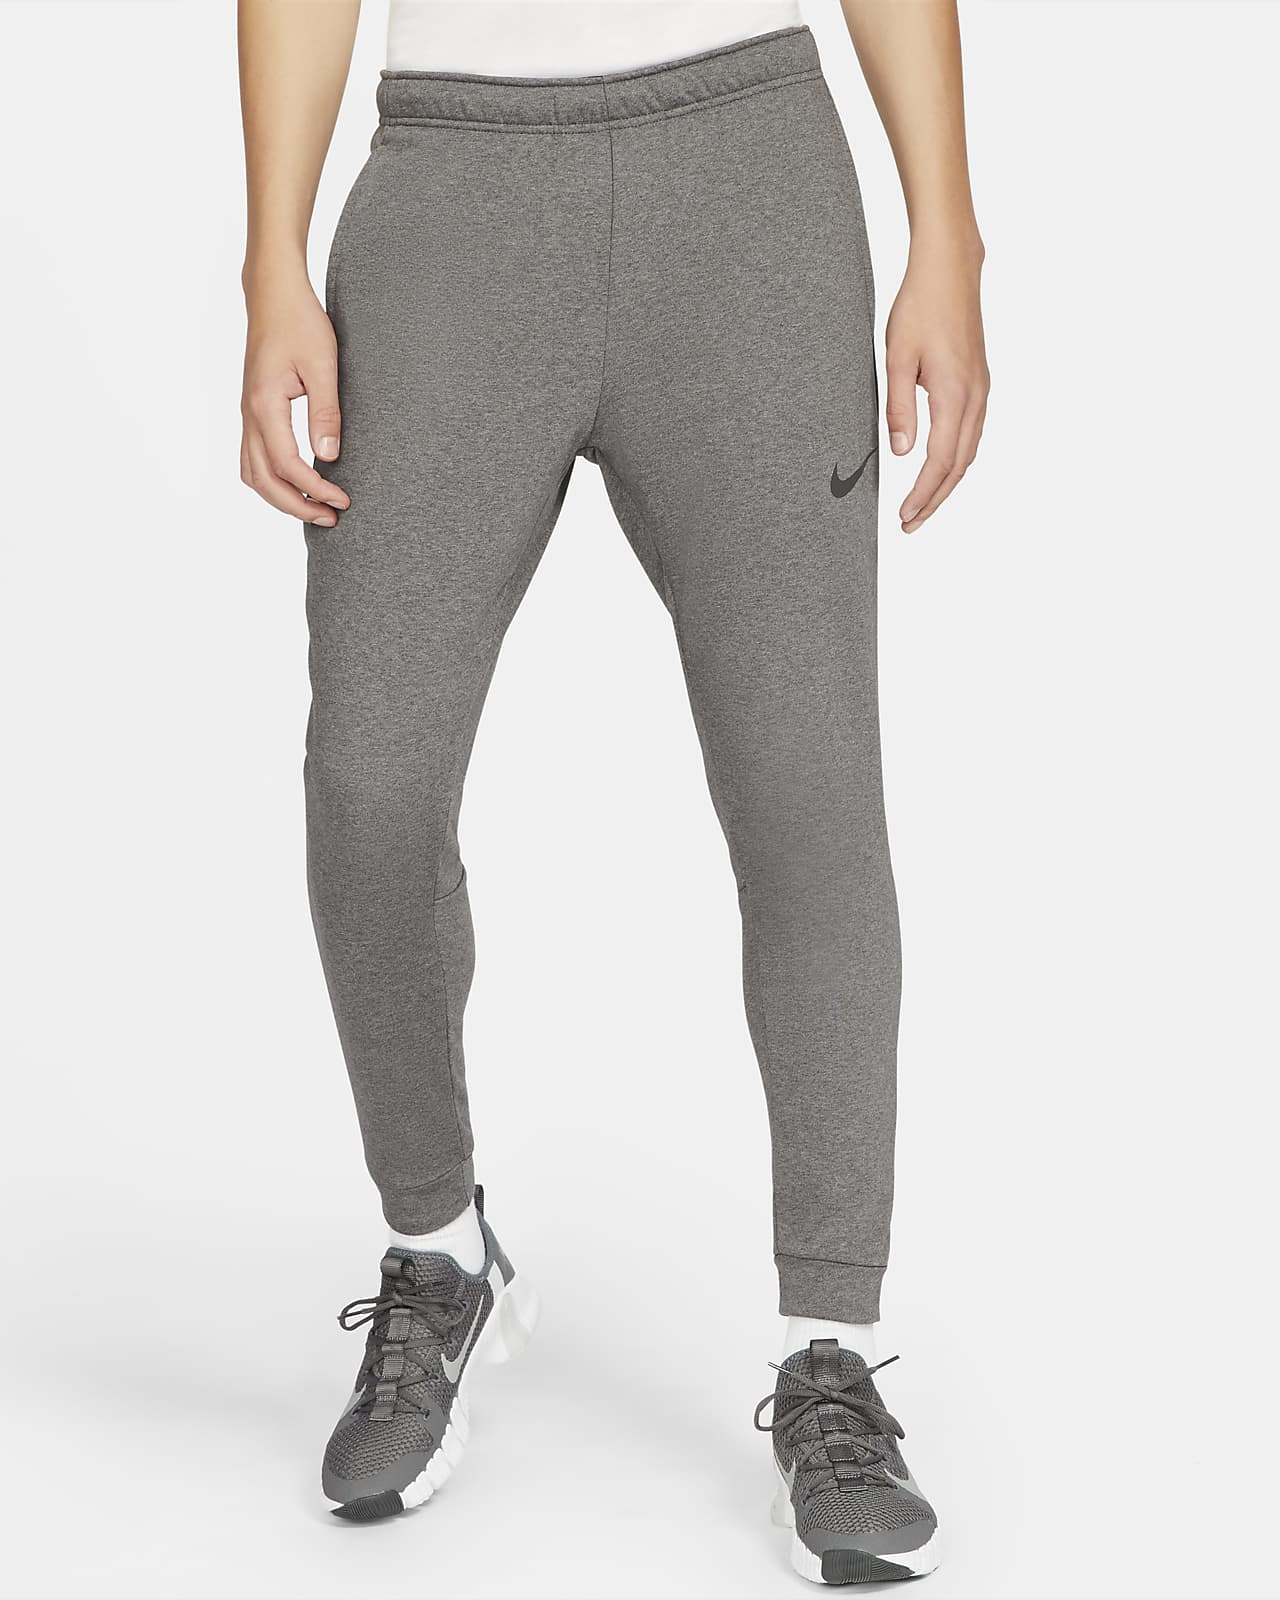 Nike Dry Men's Dri-FIT Taper Fitness Fleece Pants